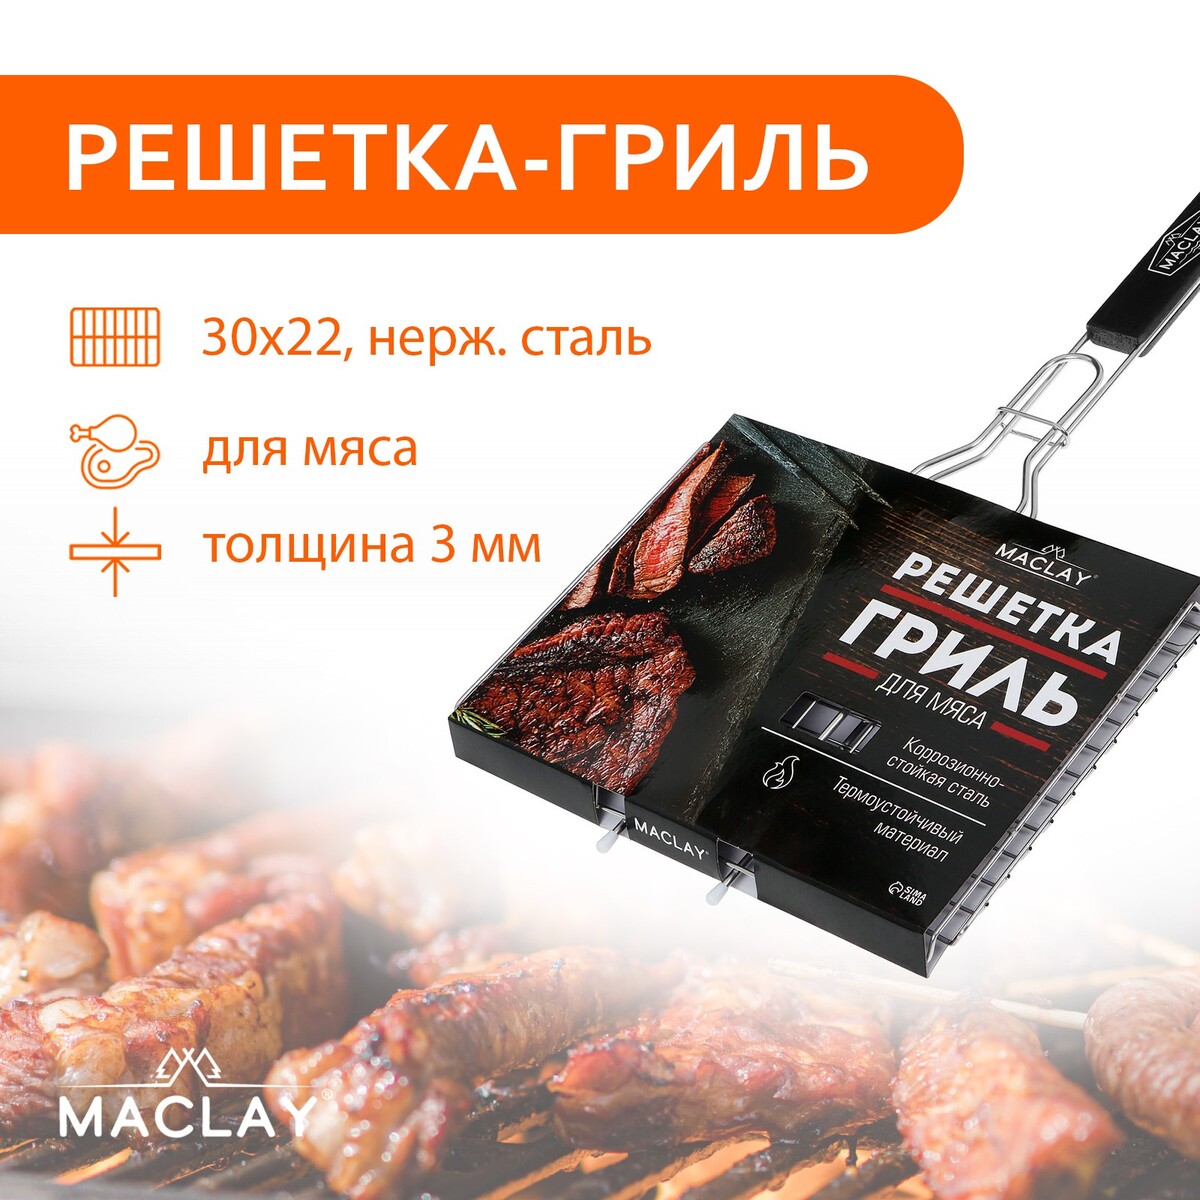 Решетка гриль maclay premium, 50х30х22 см, для мяса, нержавеющая сталь решетка гриль для рыбы maclay 57х34х25 см двойная нержавеющая сталь